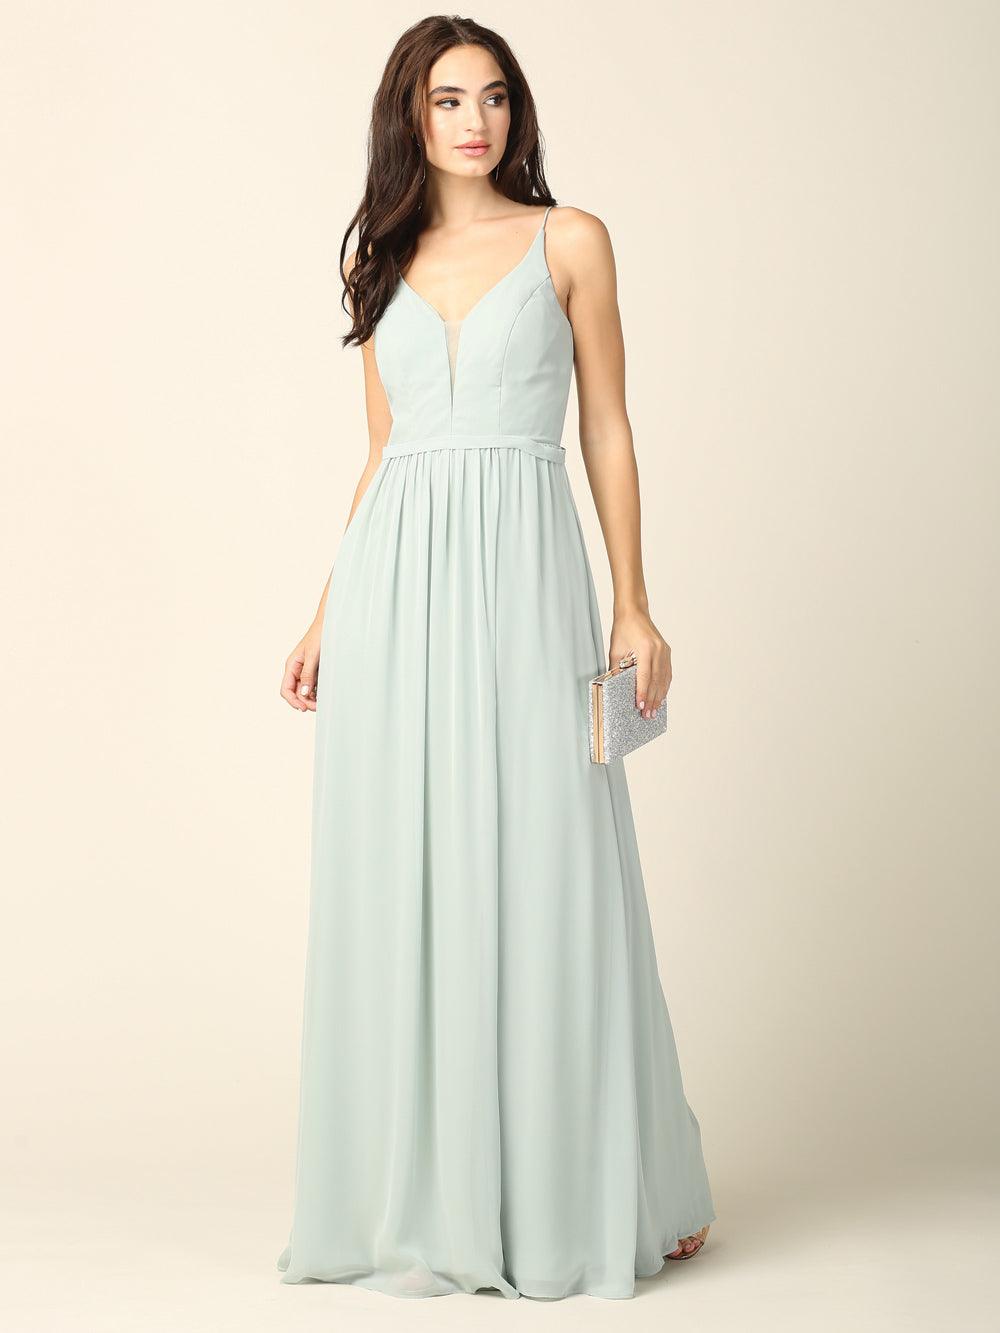 Long Formal Bridesmaids Chiffon Dress - The Dress Outlet